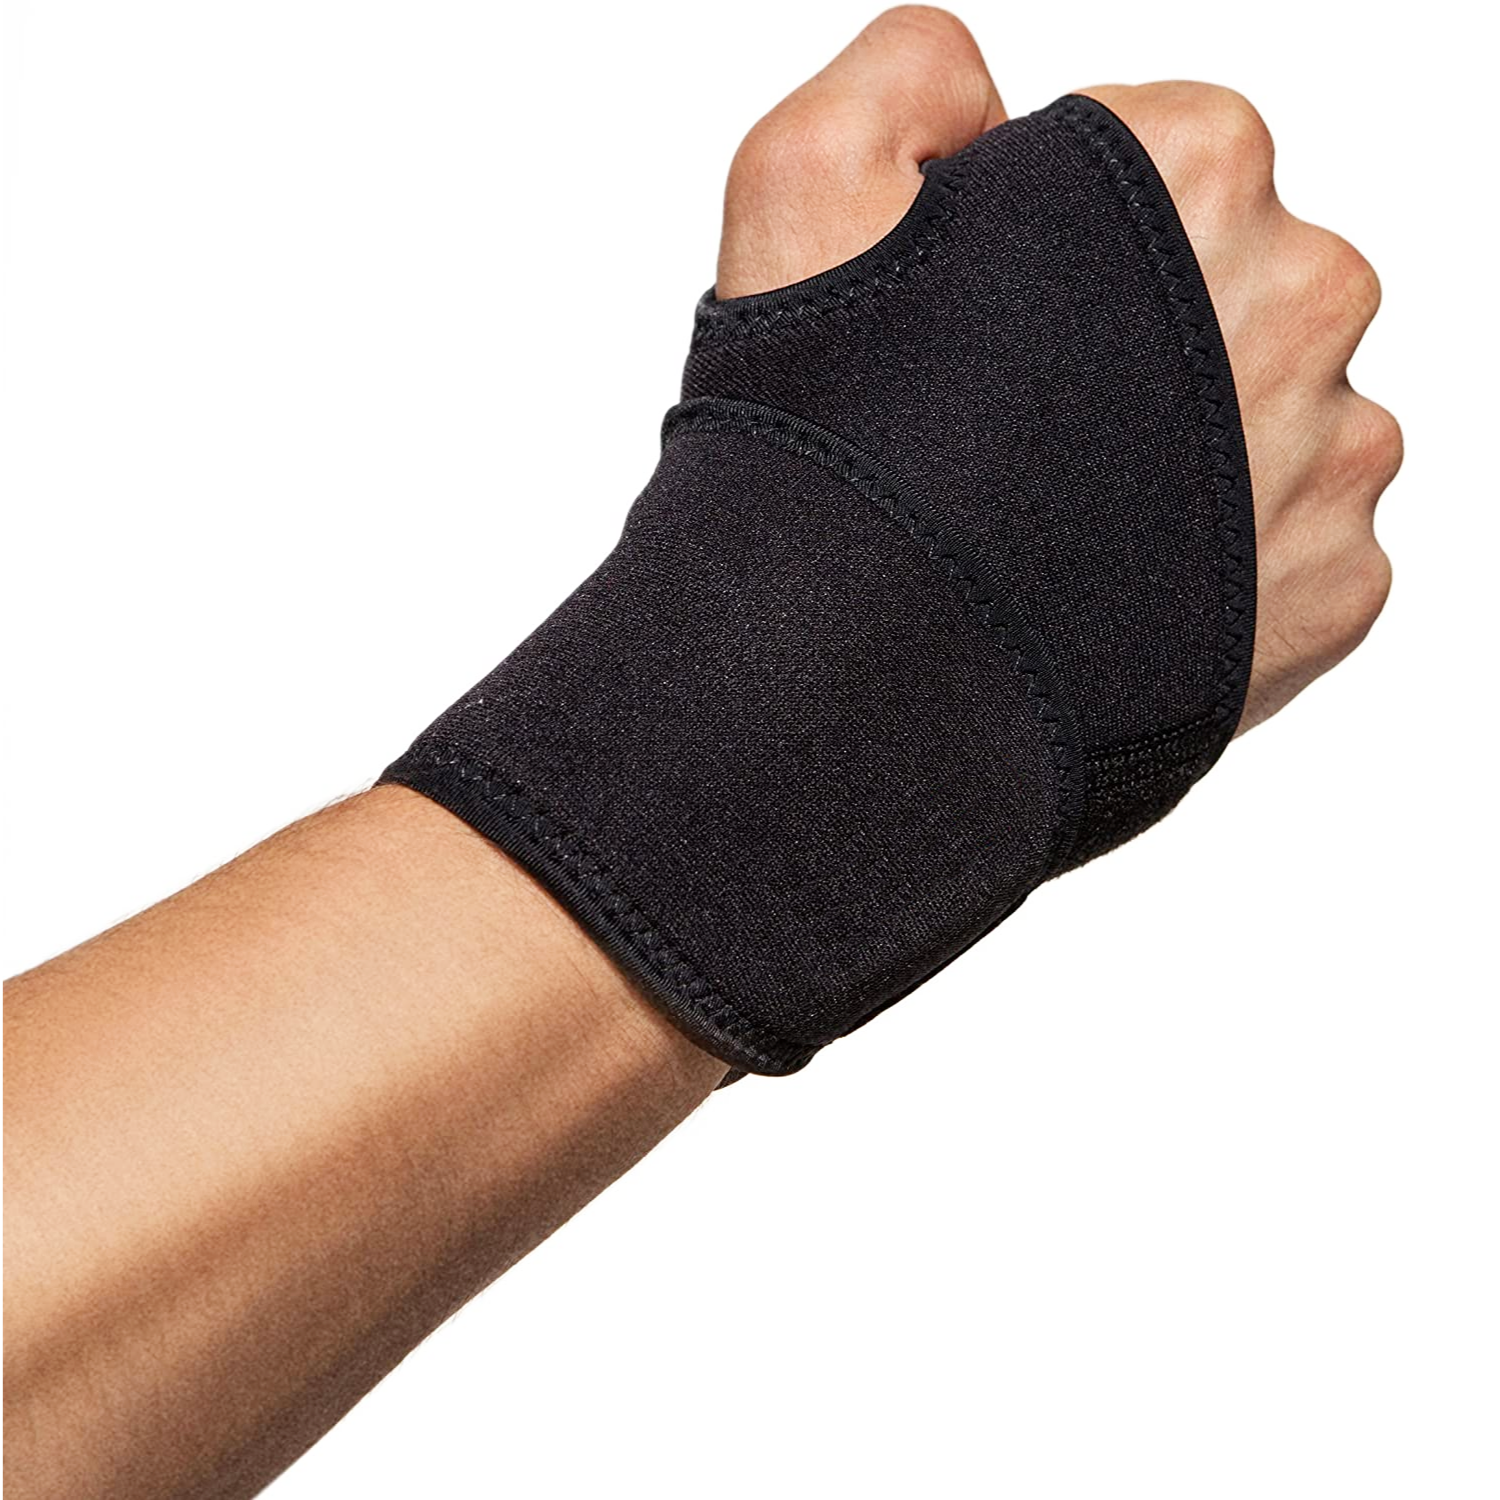 wrist guard for injured wrist lifing